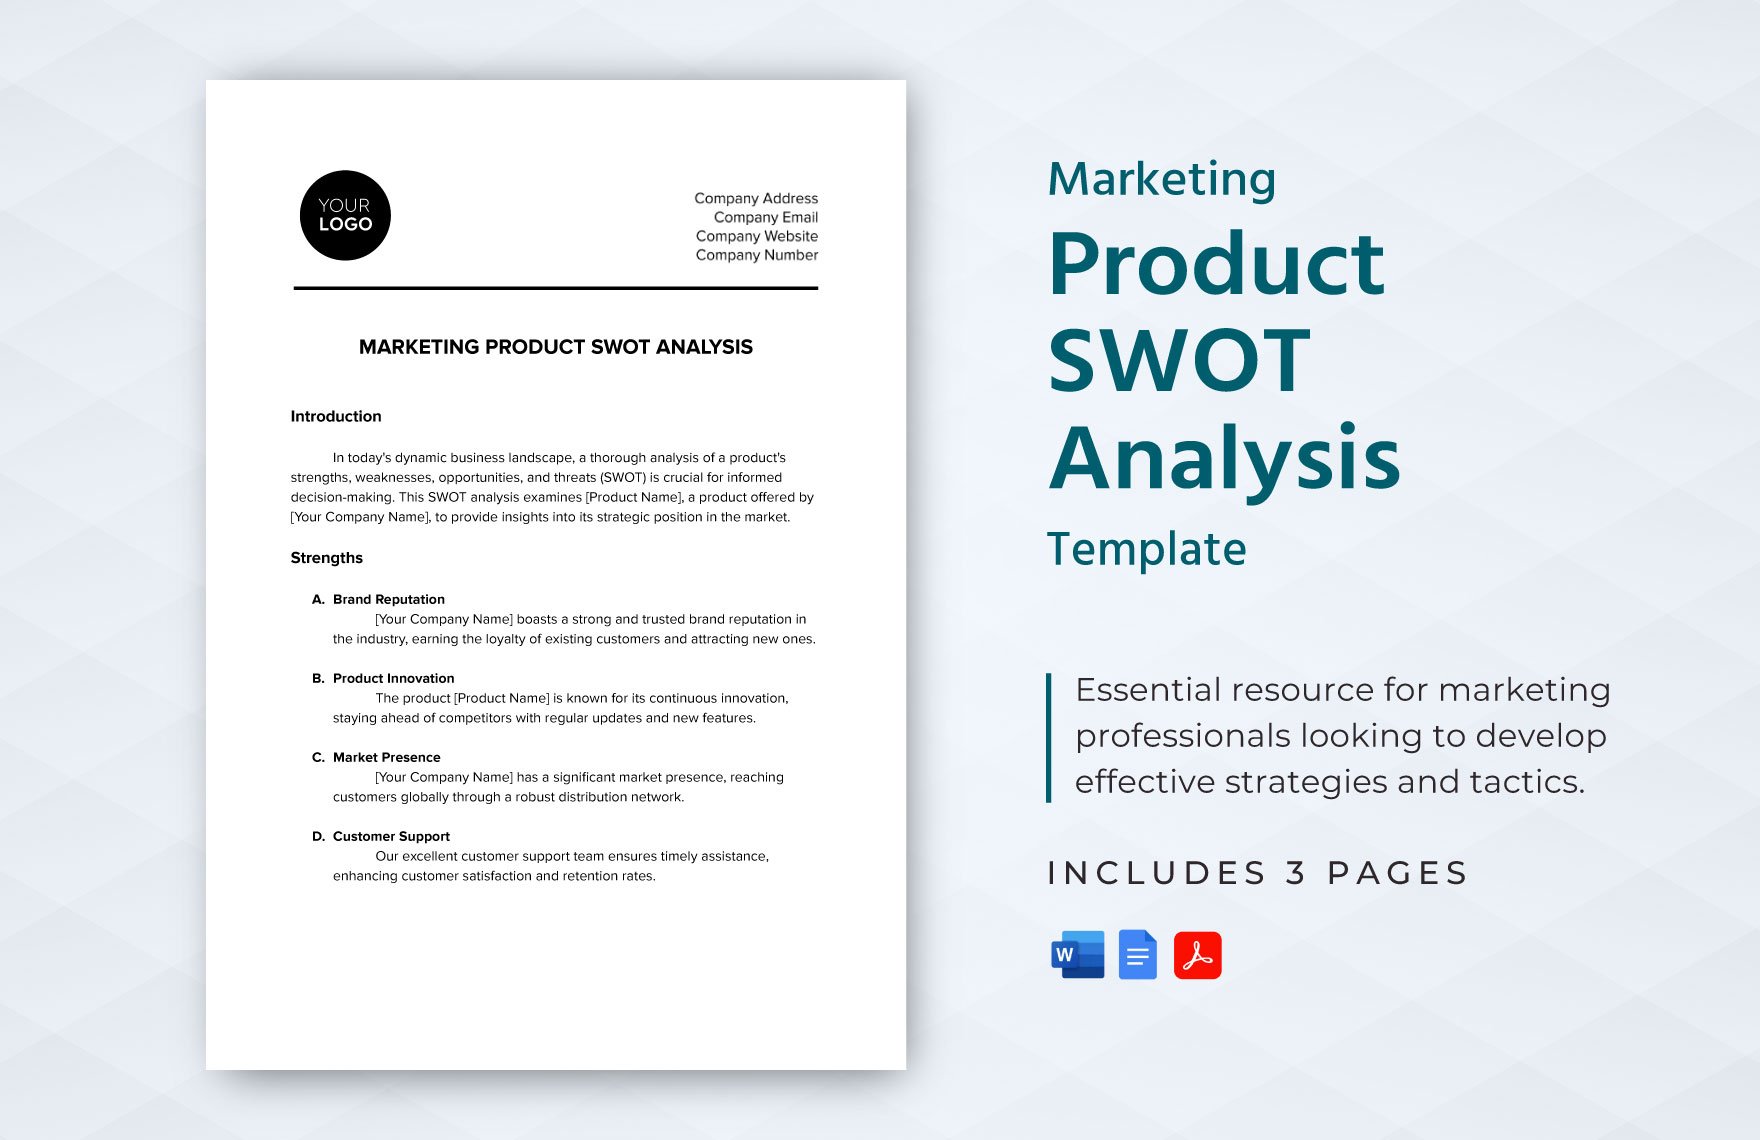 Marketing Product SWOT Analysis Template